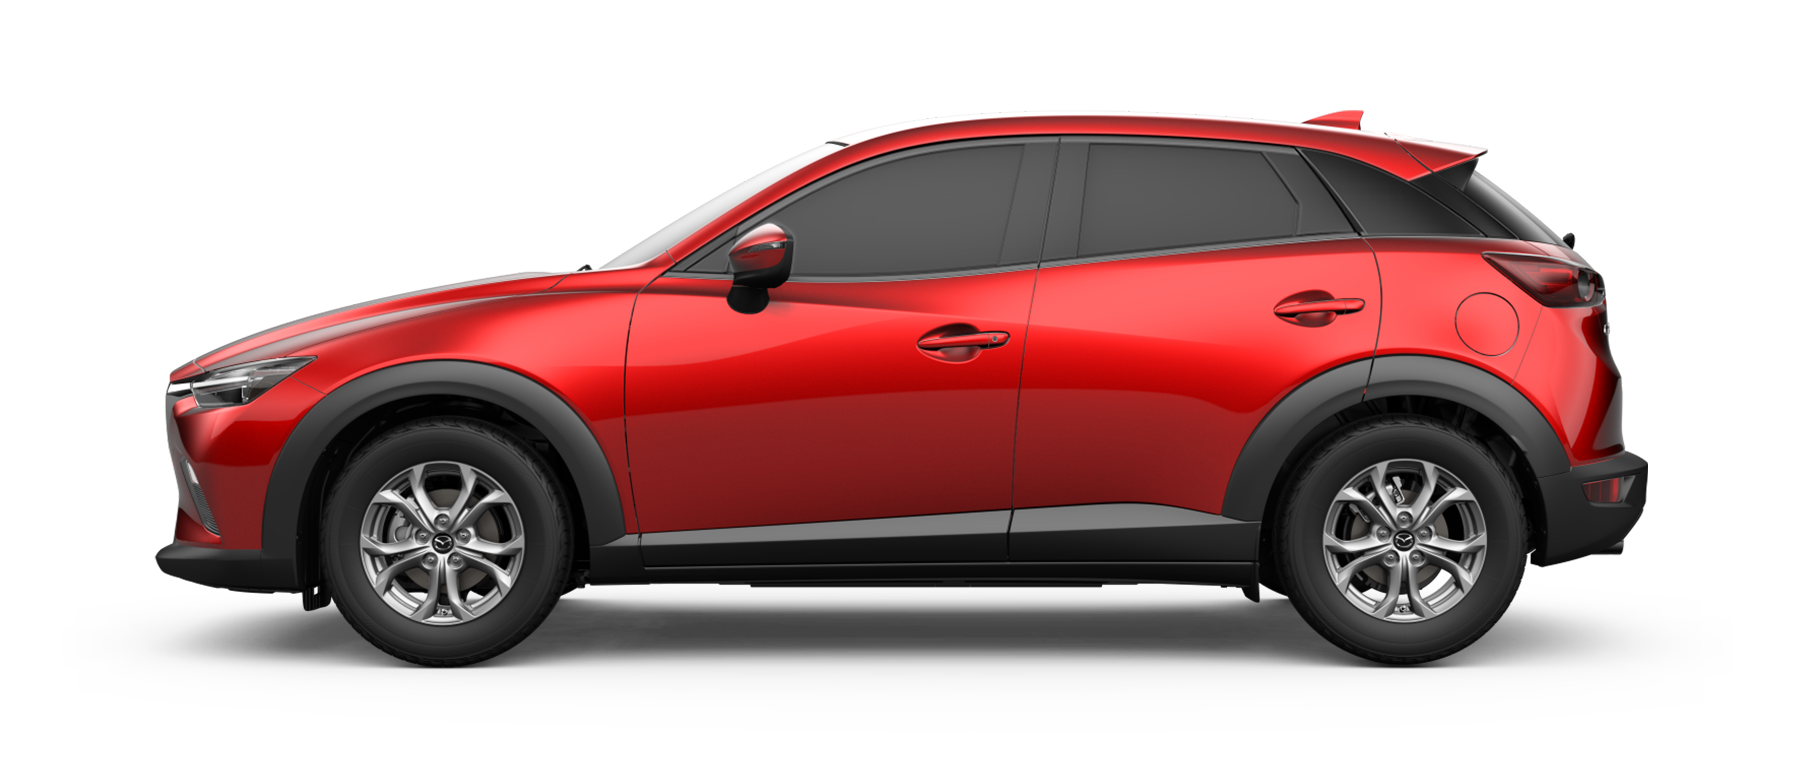 Mazdaspeed 3 Transparent Image